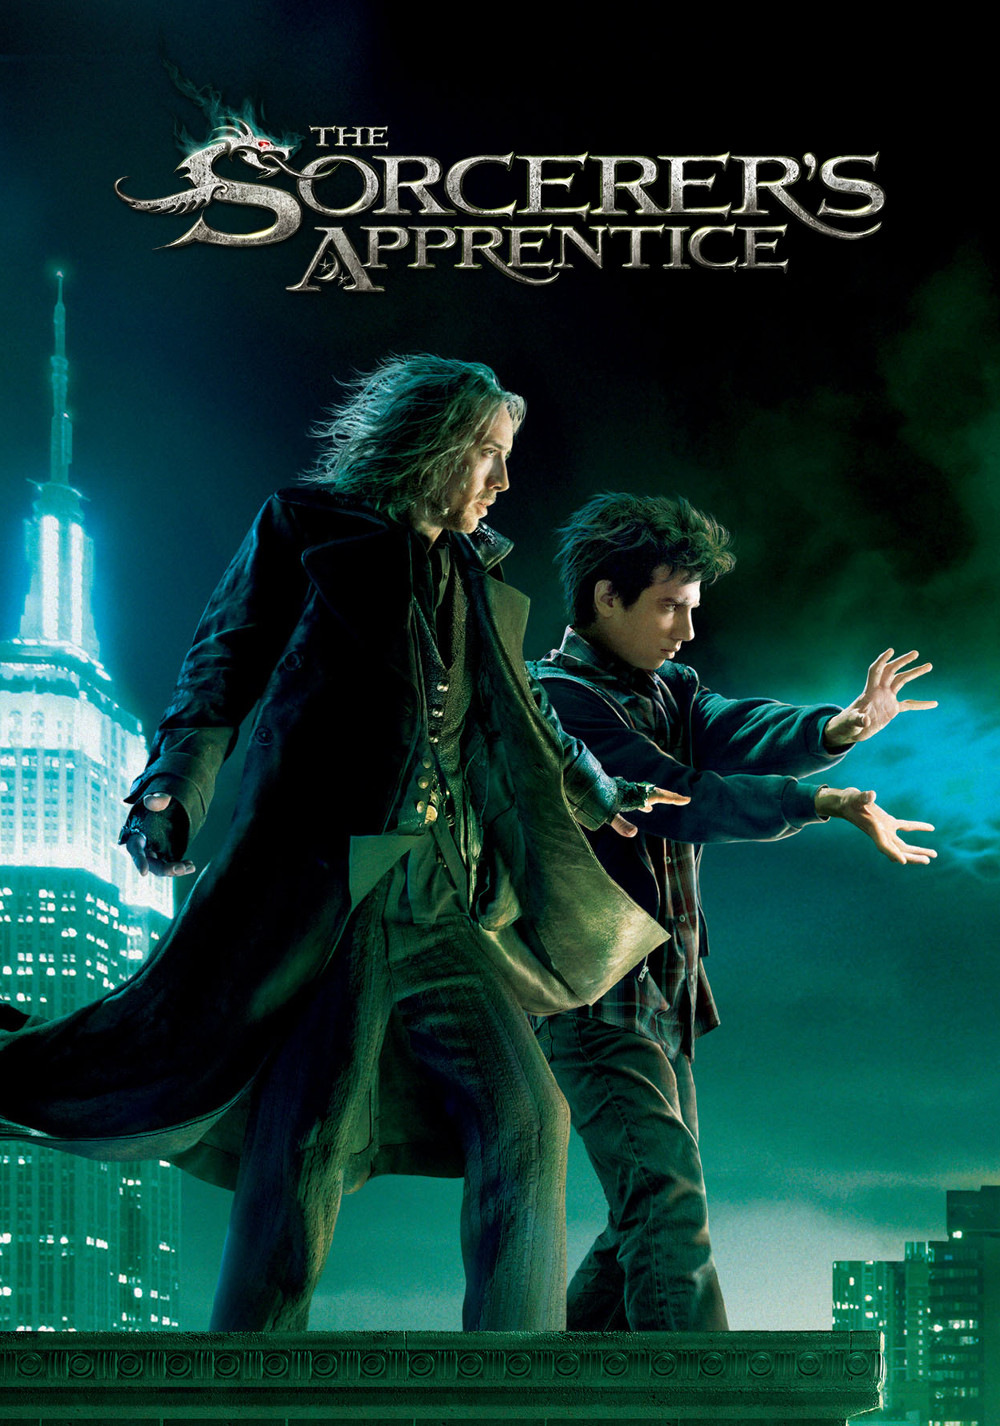 The Sorcerer'S Apprentice Wallpapers